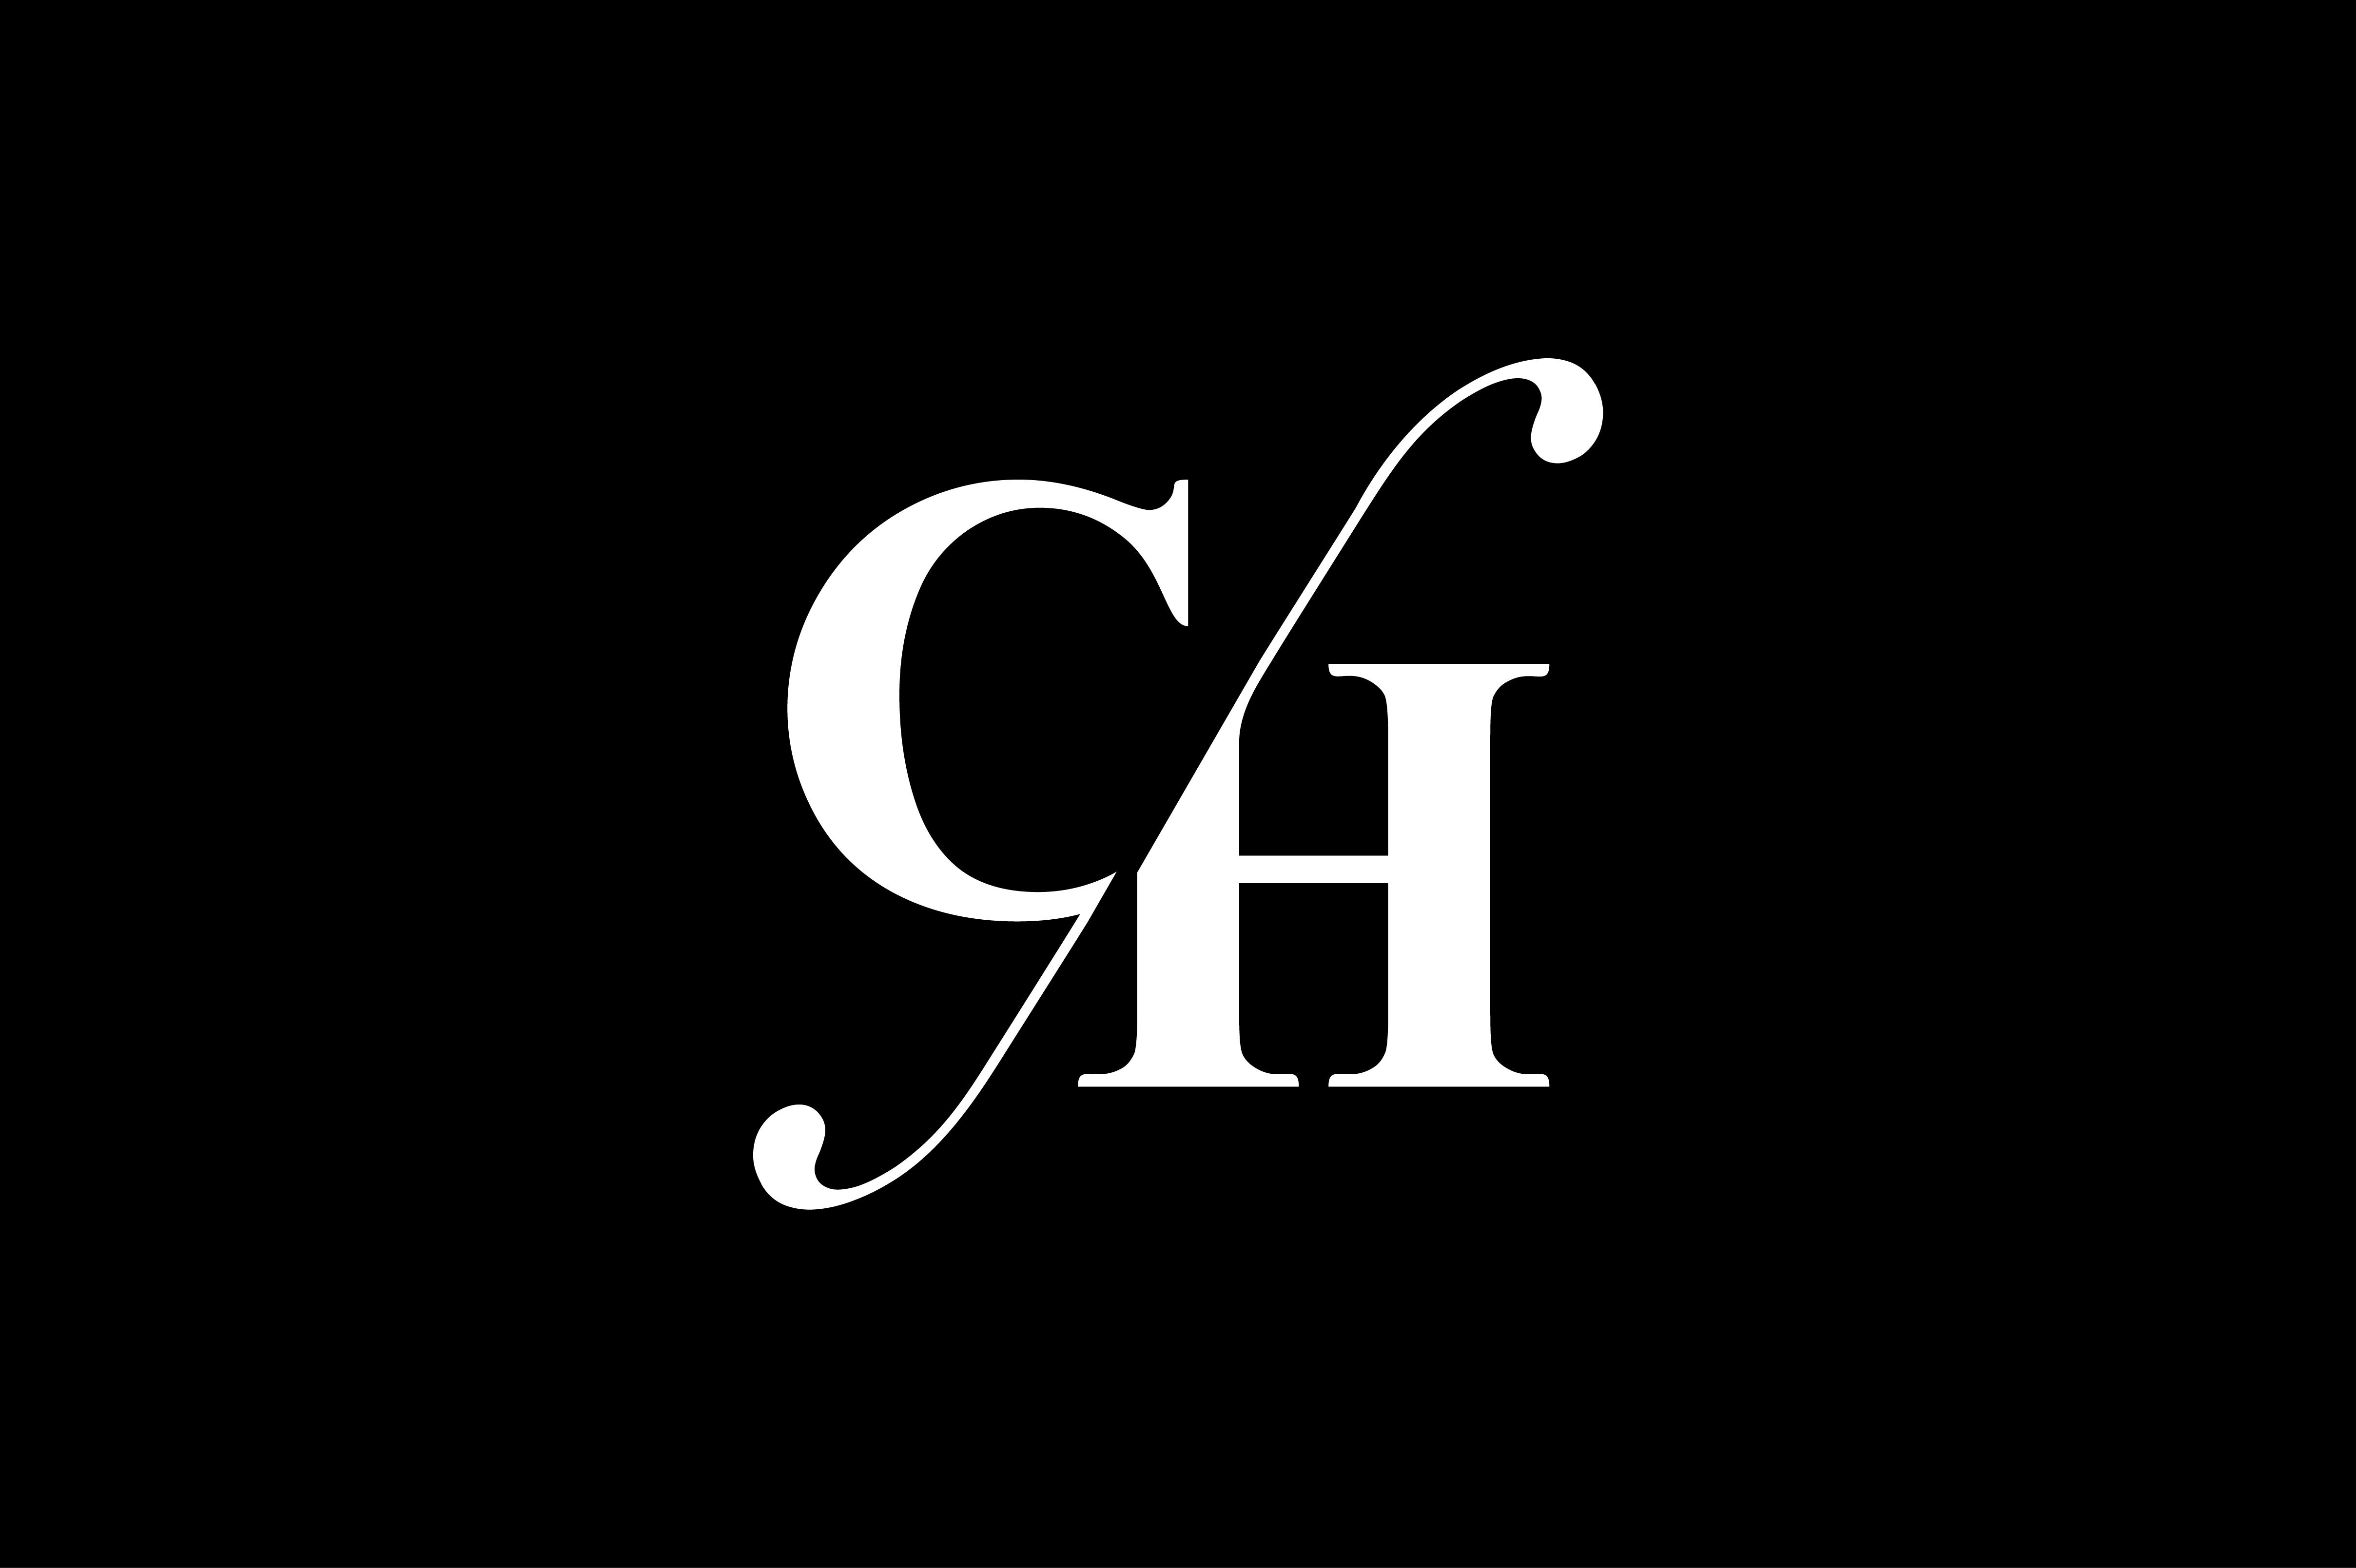 CH Monogram Logo Design By Vectorseller | TheHungryJPEG.com